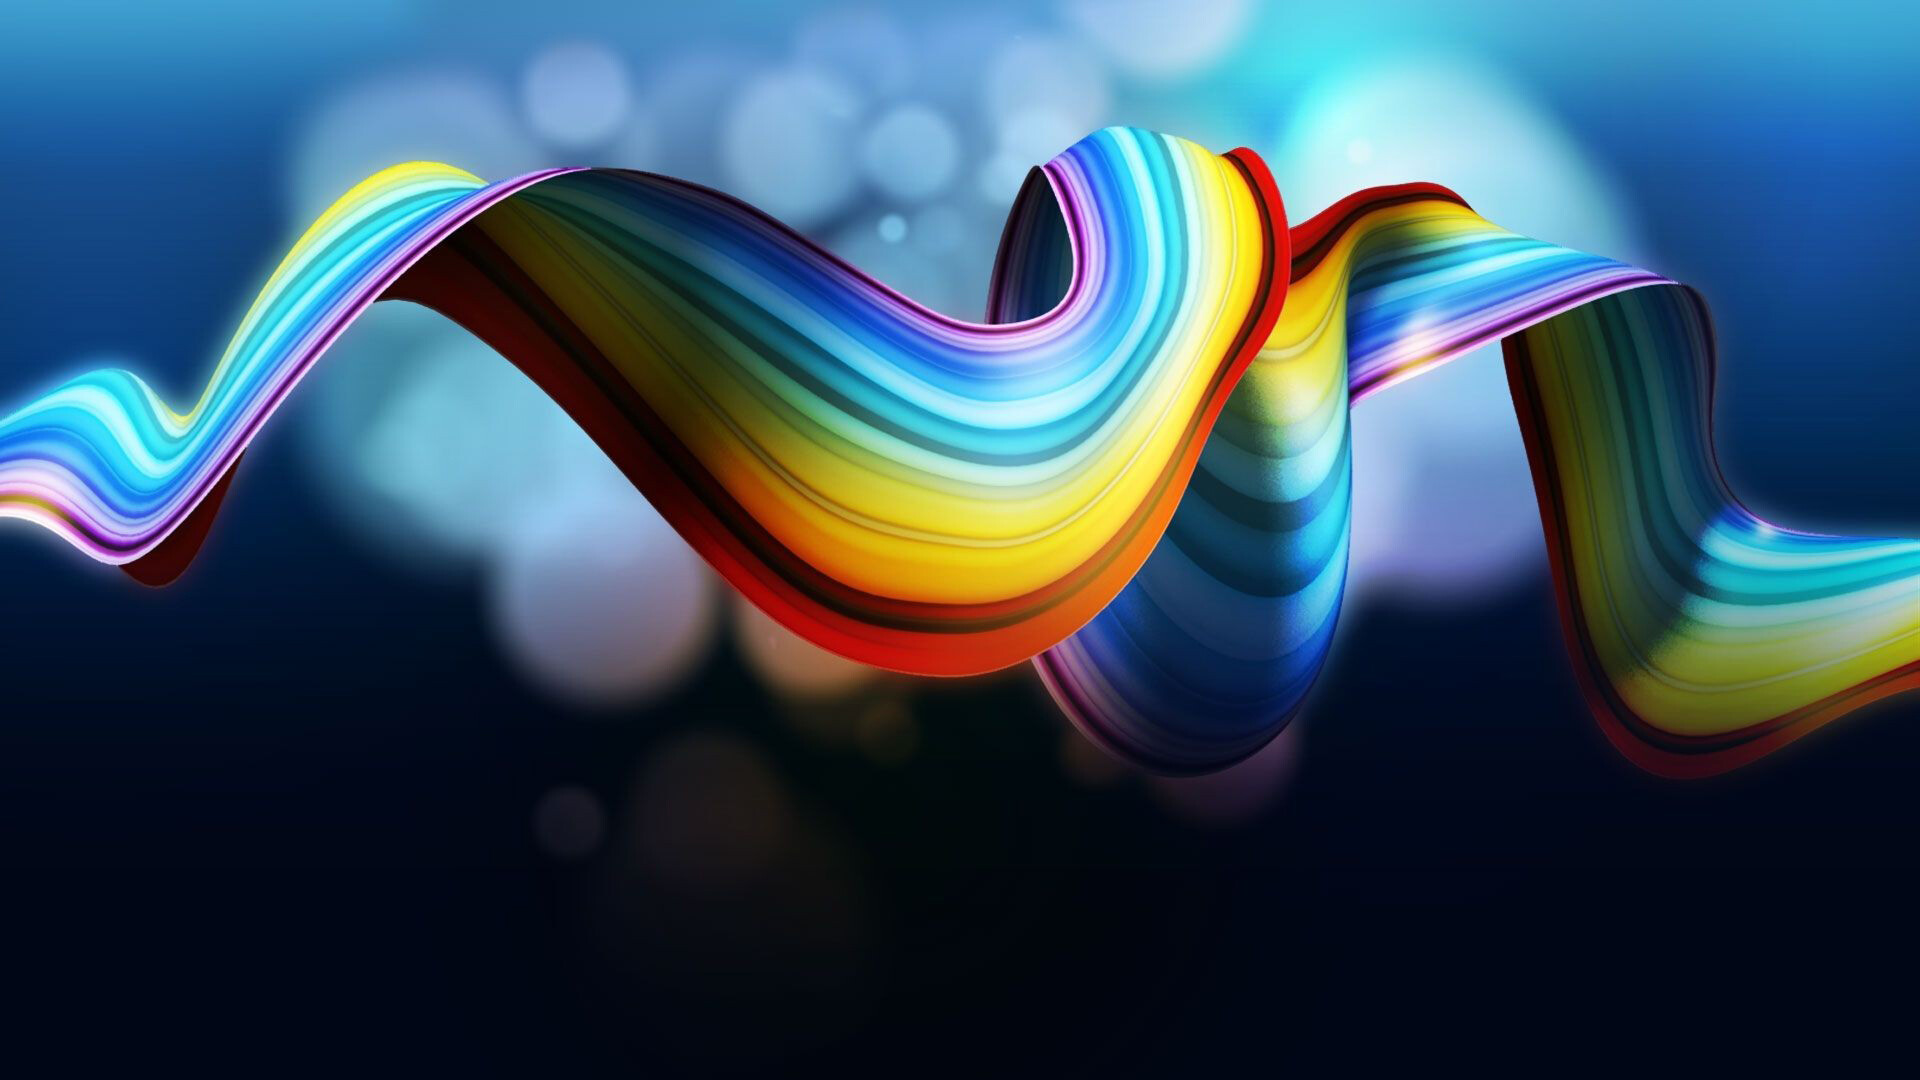 Rainbow Colors: Abstract digital art, Visual effects, Three-dimensional space. 1920x1080 Full HD Wallpaper.